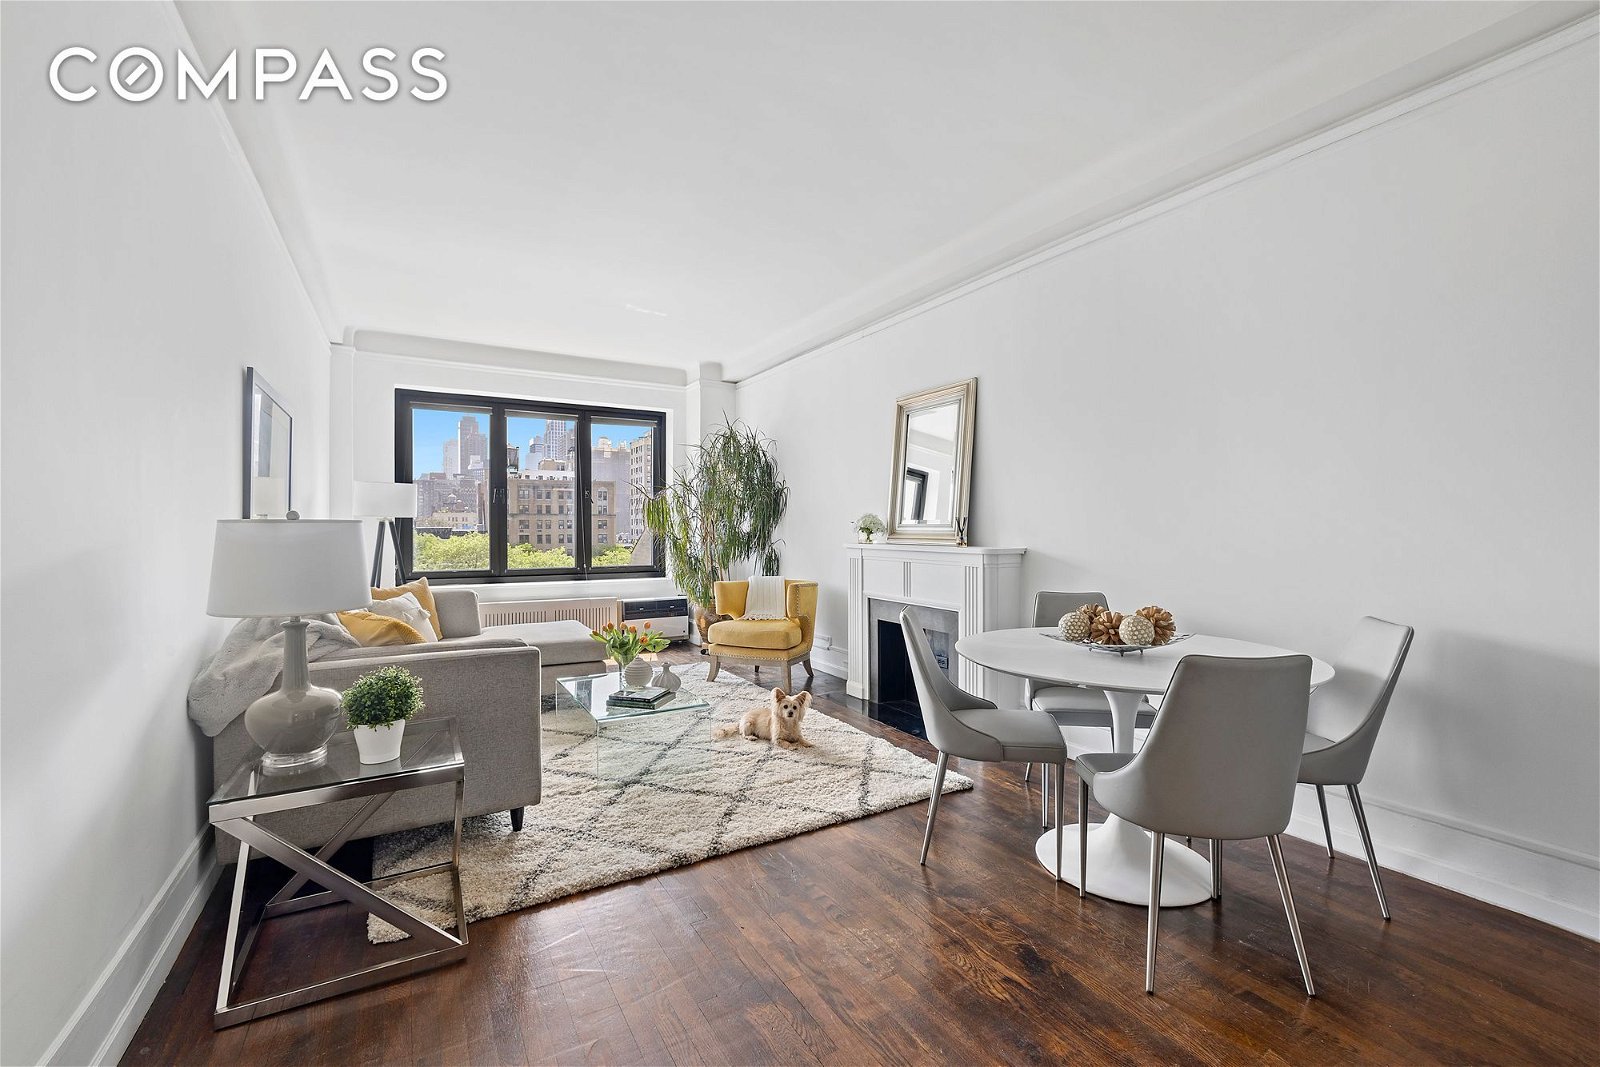 Real estate property located at 150 79th #6-E, New York, New York City, NY